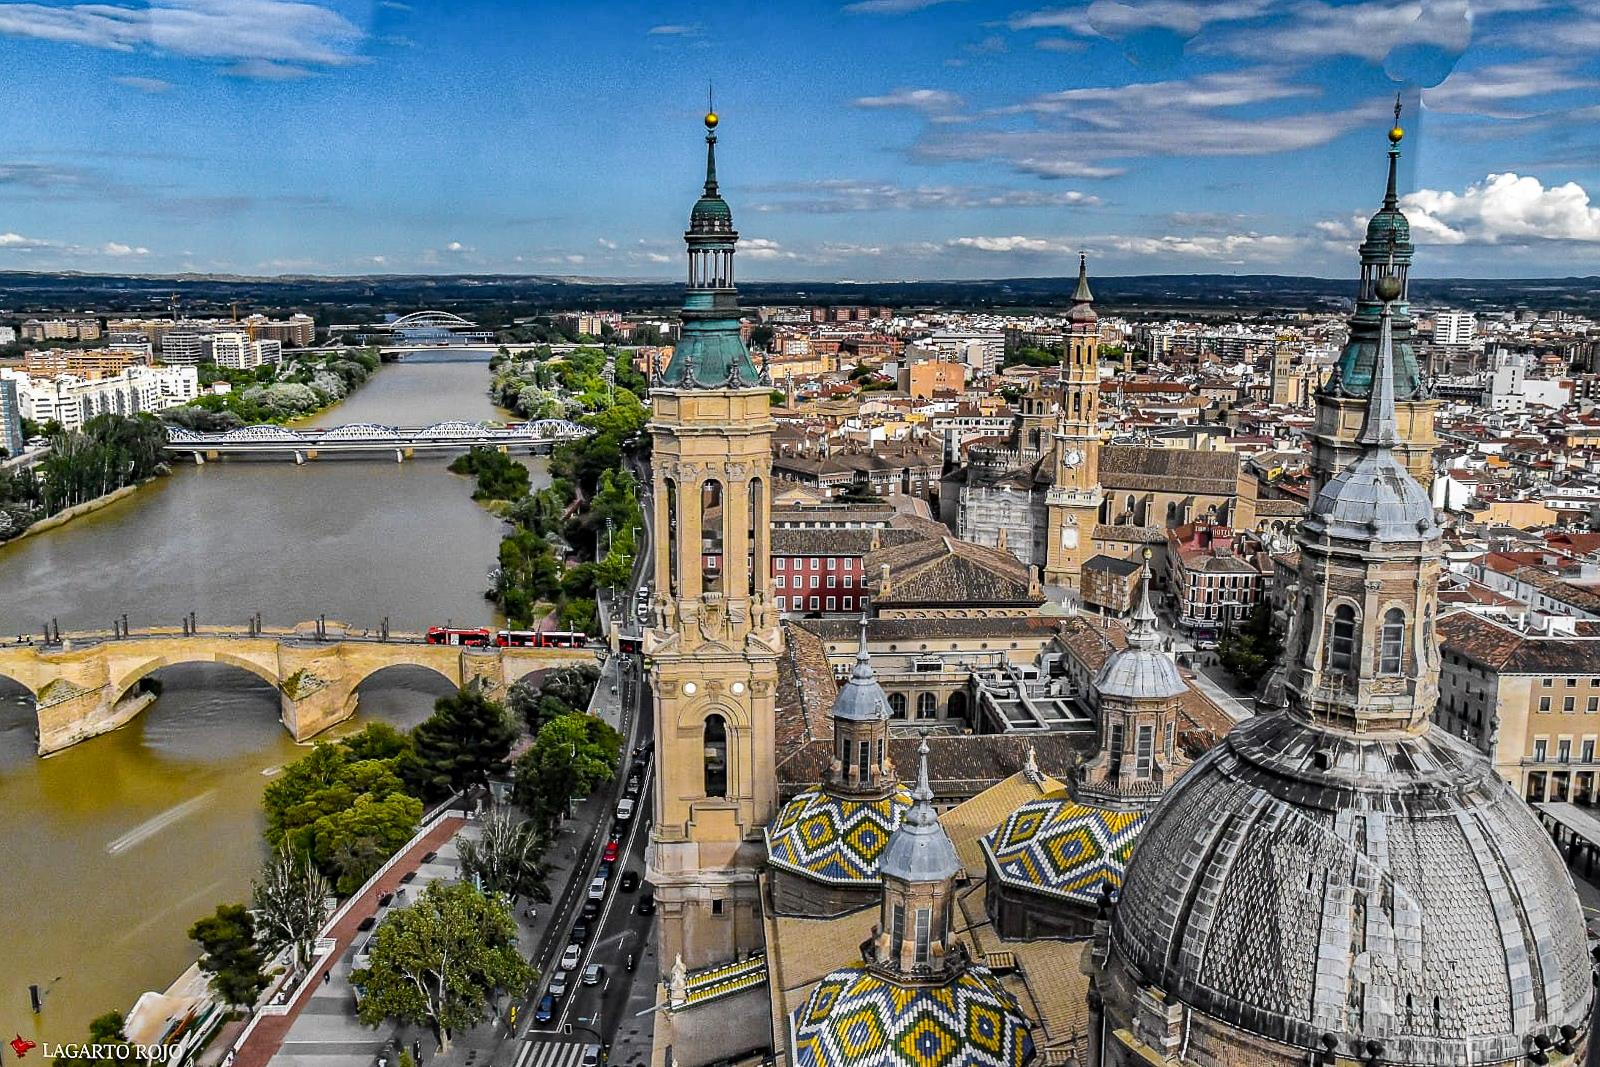 Free-tour-Cathedrals-of-Zaragoza-1